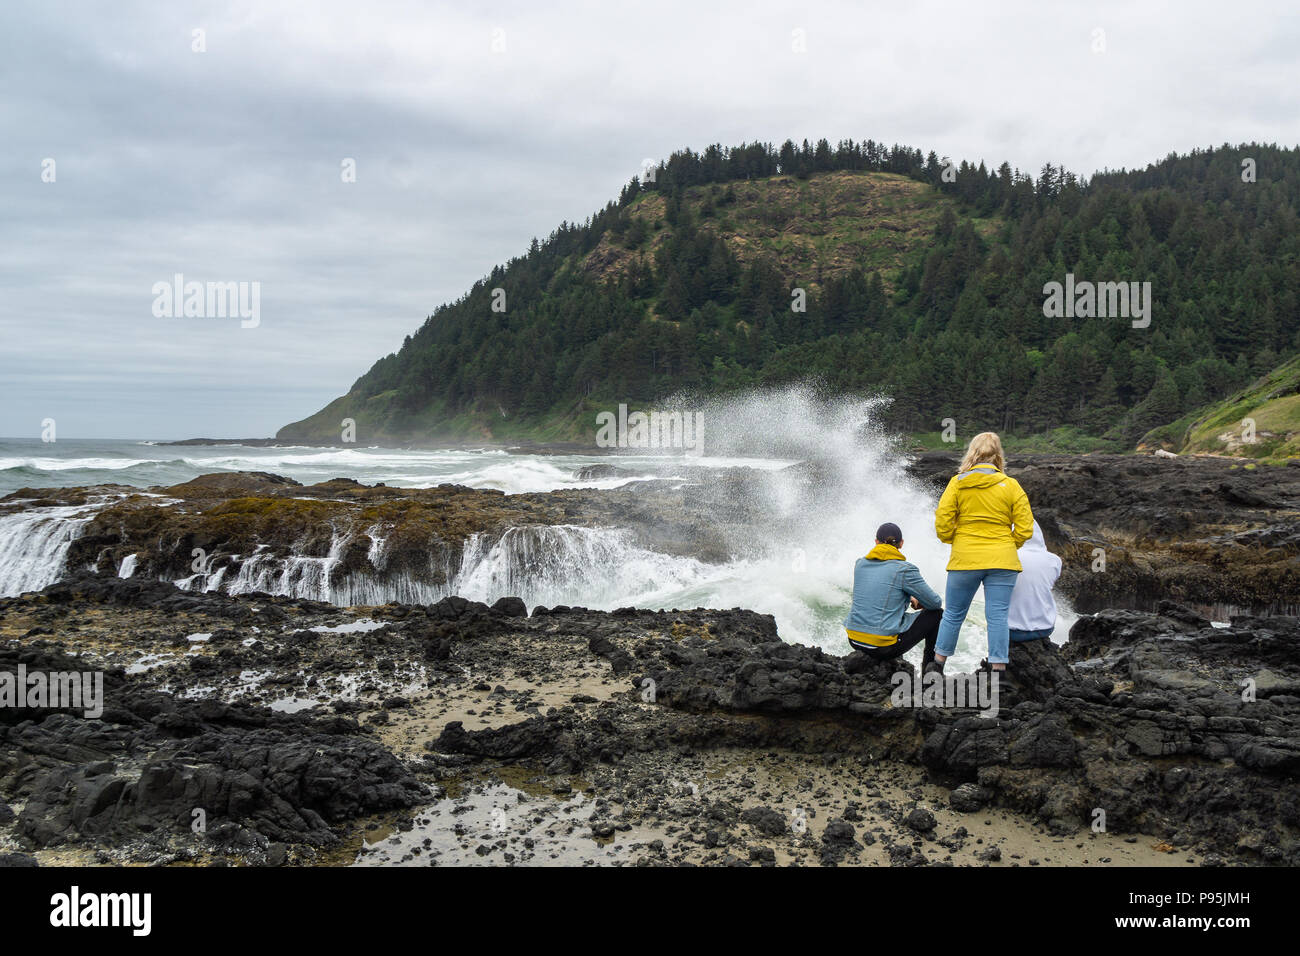 Young people enjoying basaltic headland of Cape Perpetua Scenic Area watching waves crashing in a churn, Oregon Coast, USA. Stock Photo